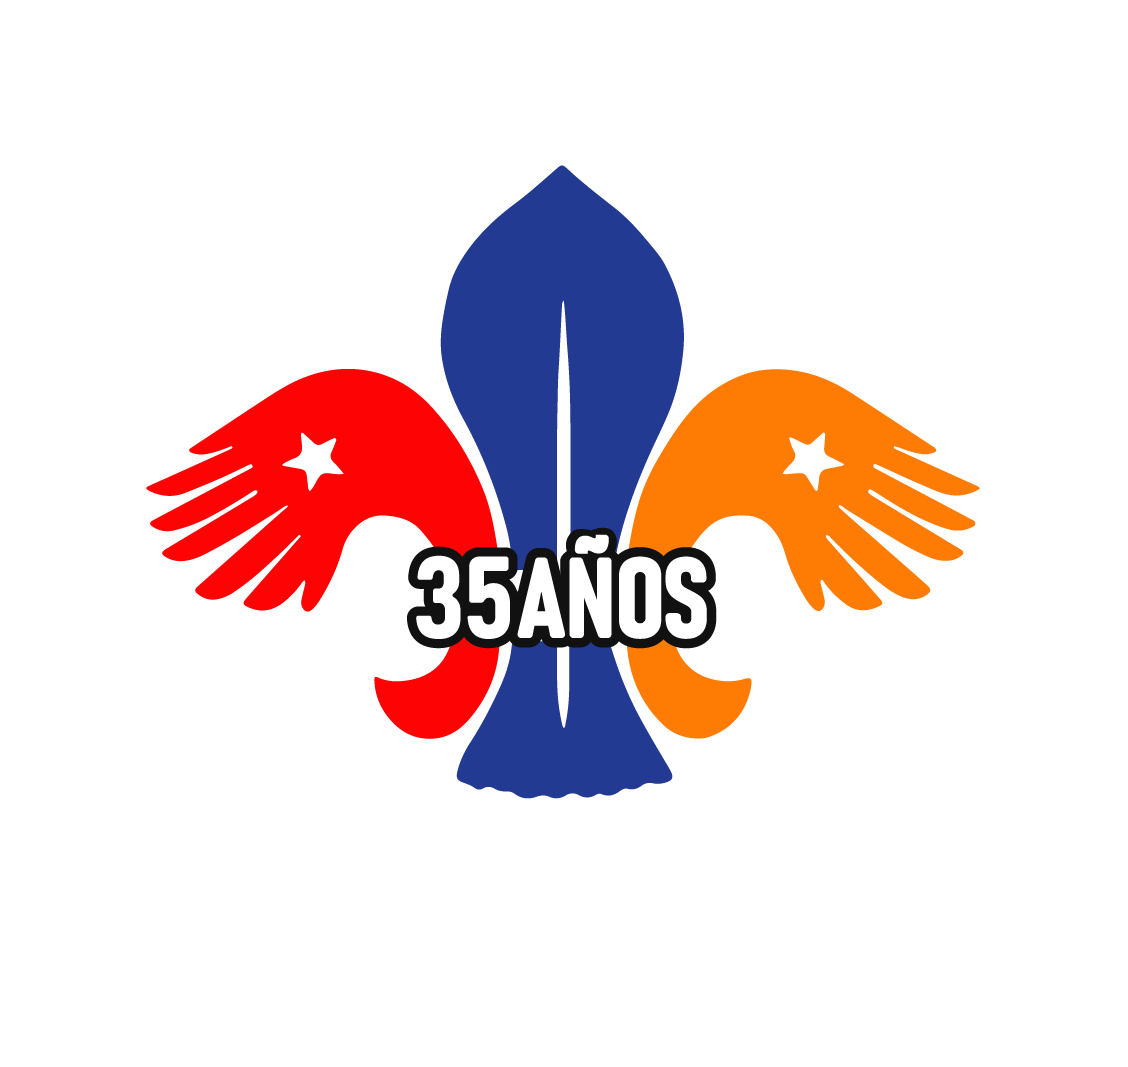 Grupo Scout General Antranik